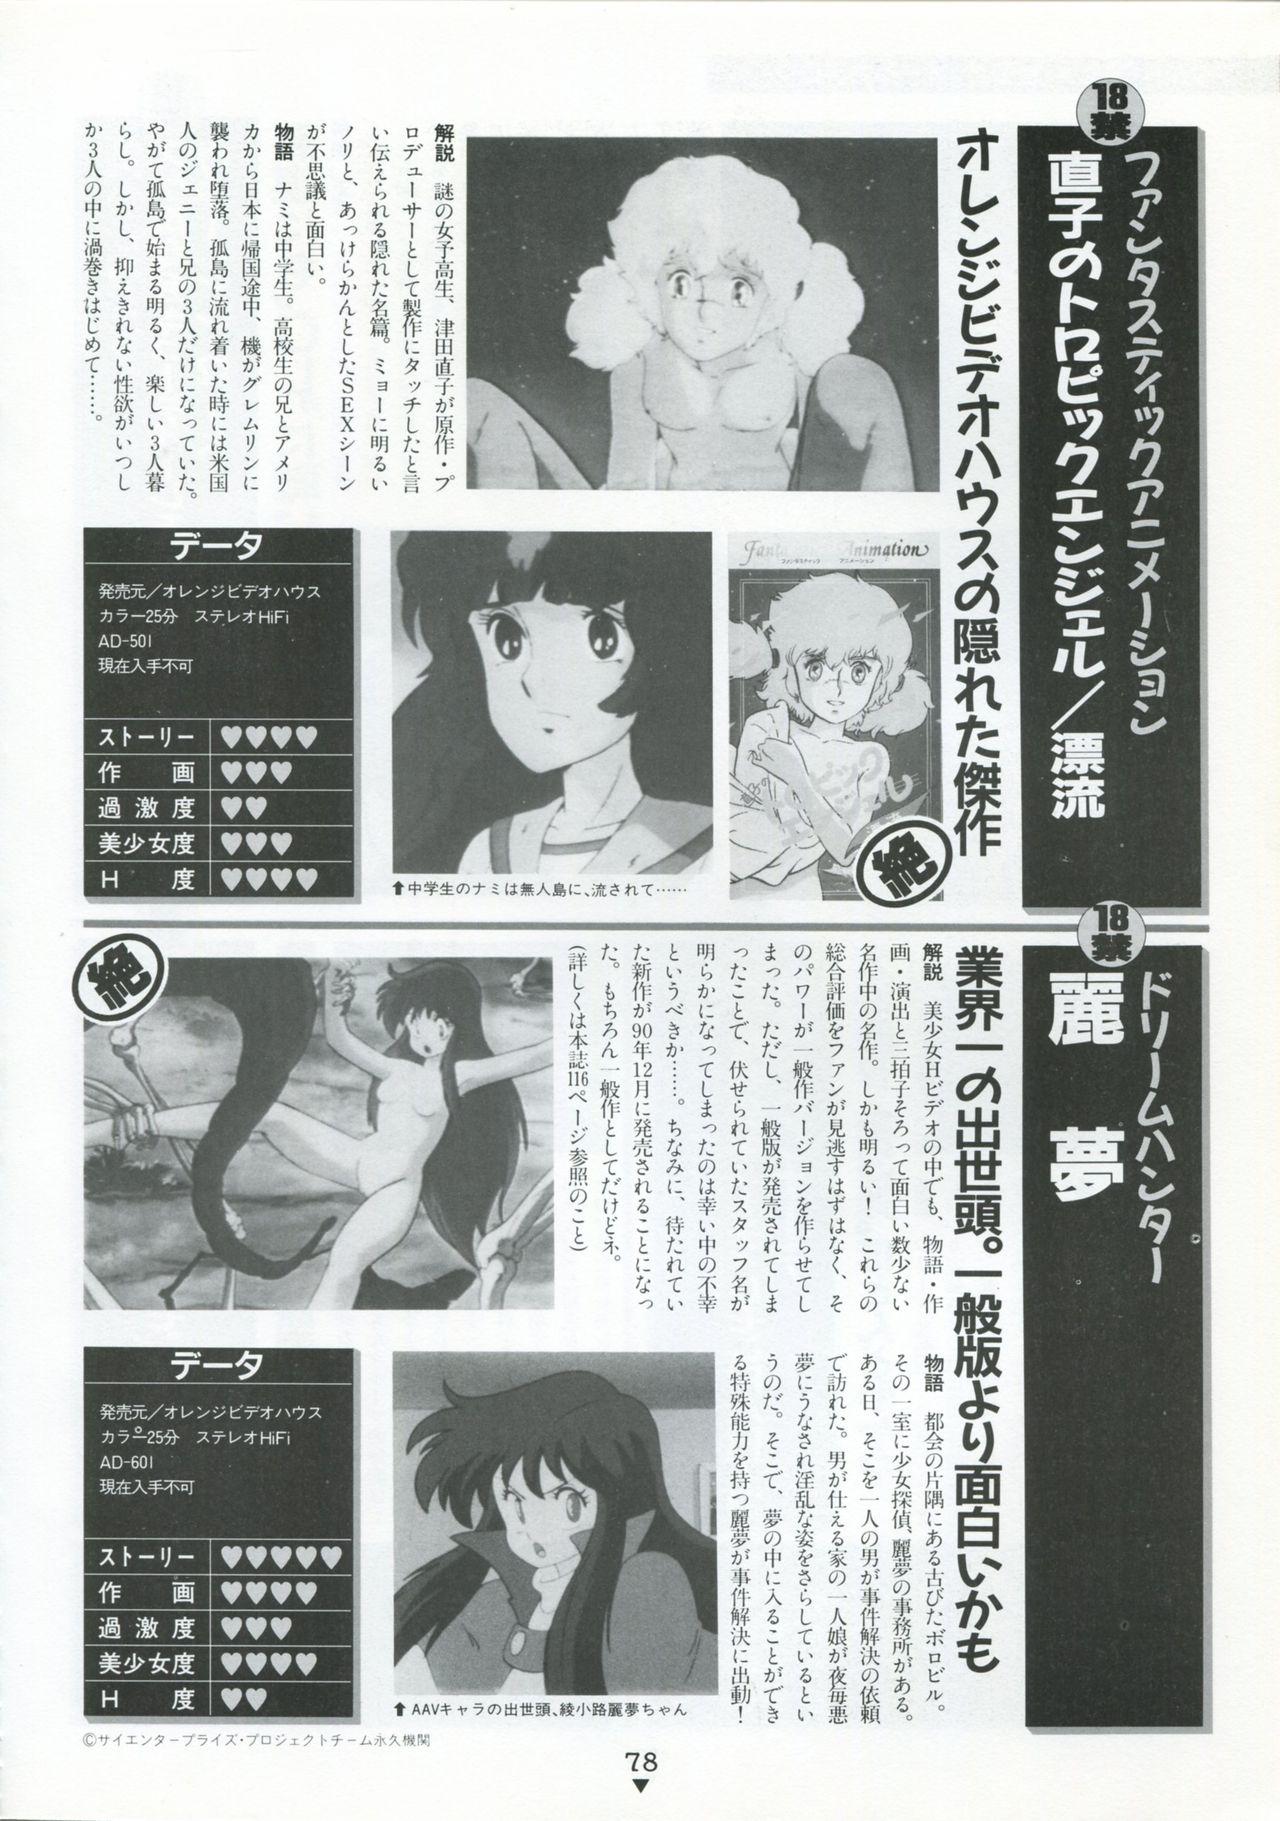 Bishoujo Anime Daizenshuu - Adult Animation Video Catalog 1991 73